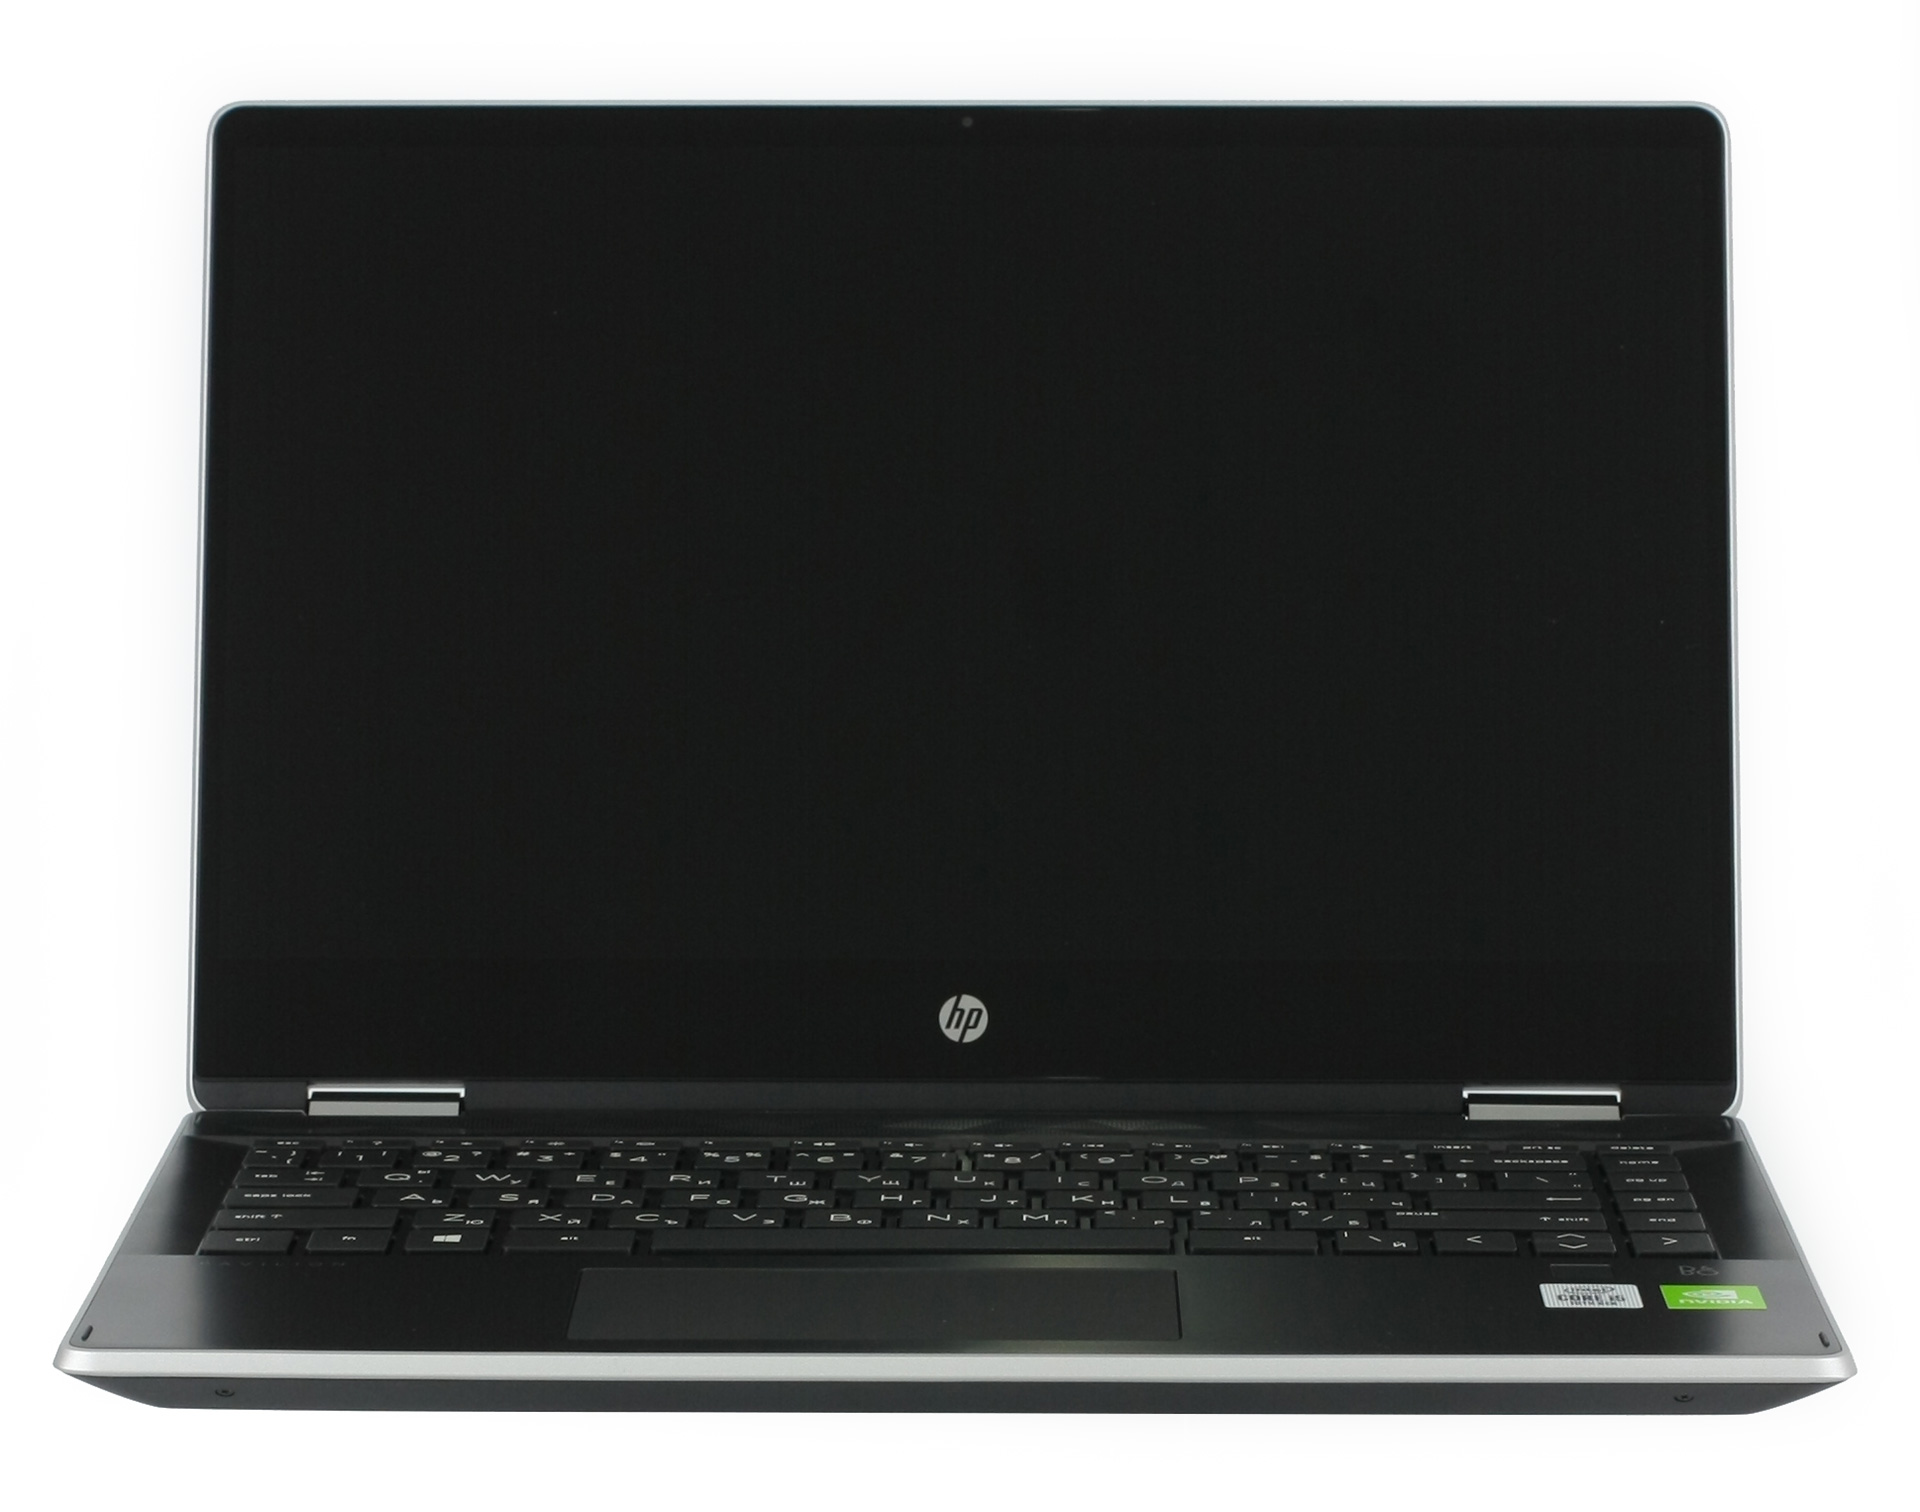 HP Pavilion x360 Convertible Notebook Review - PCQuest